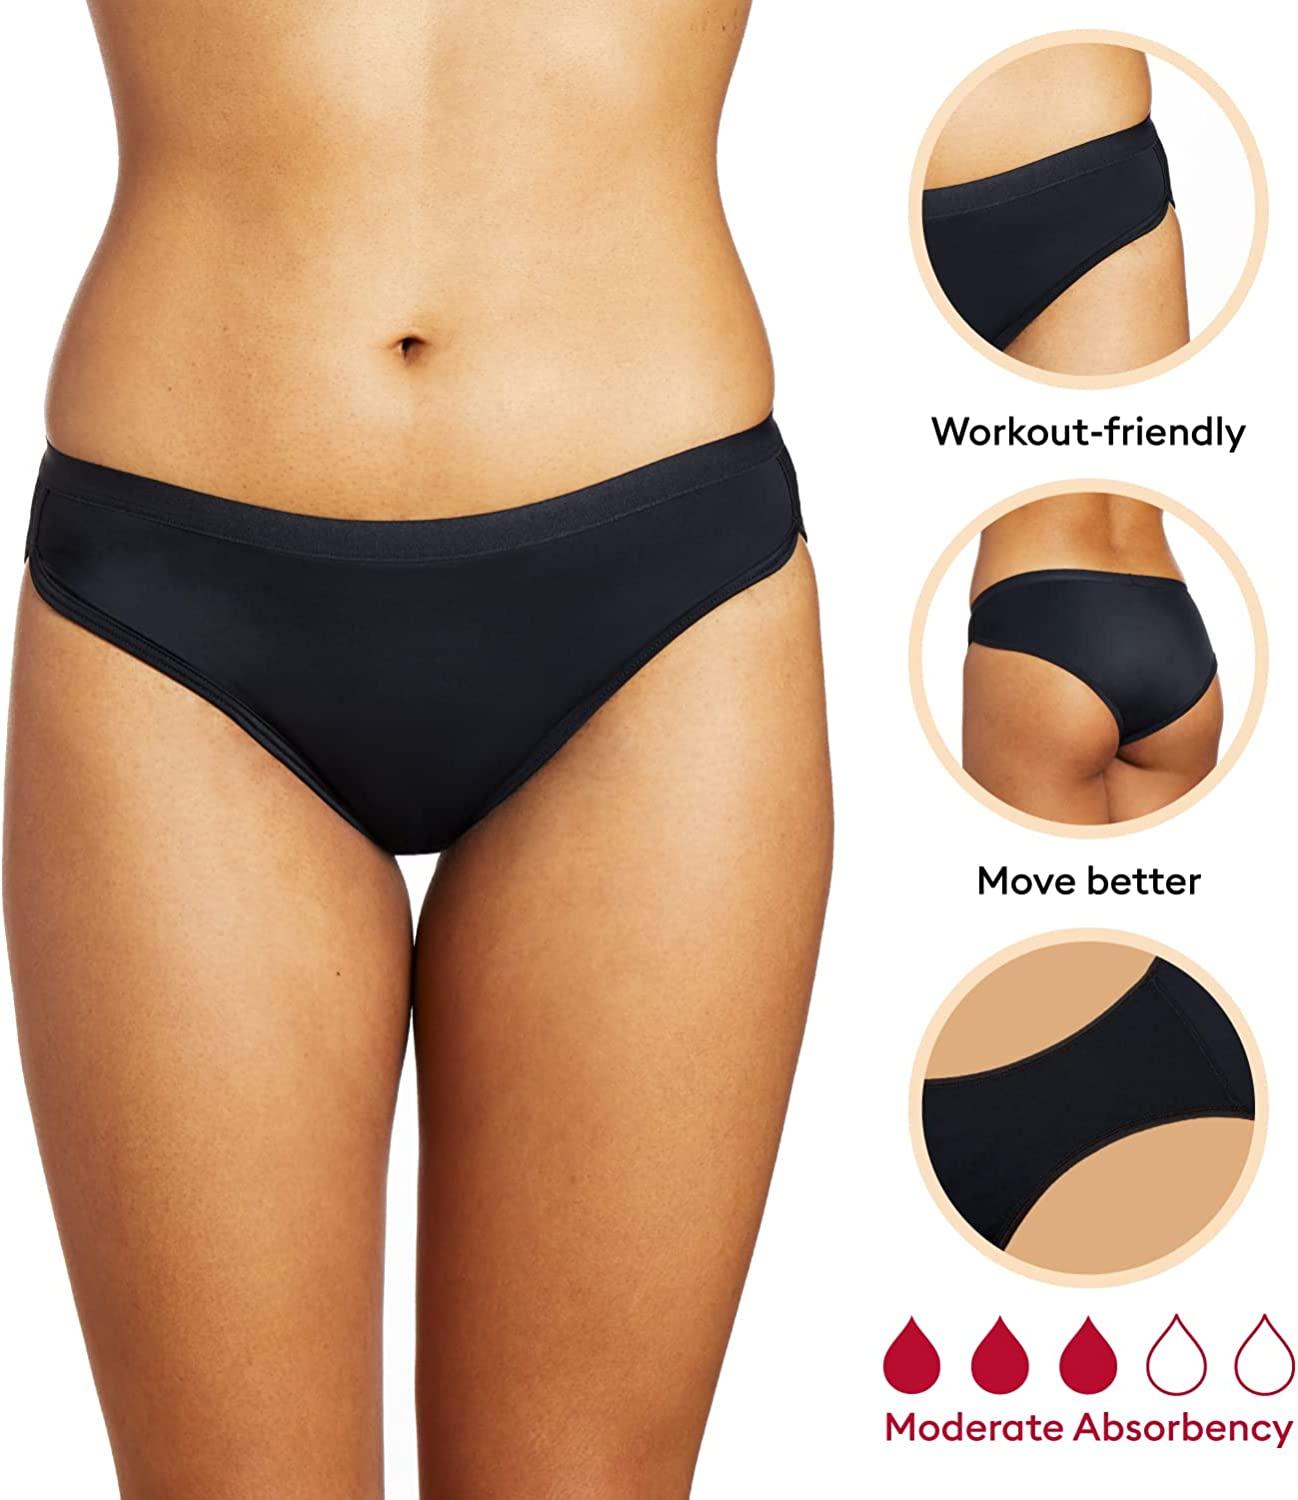 Thinx Sport Period Underwear for Women Moderate Absorbency Period